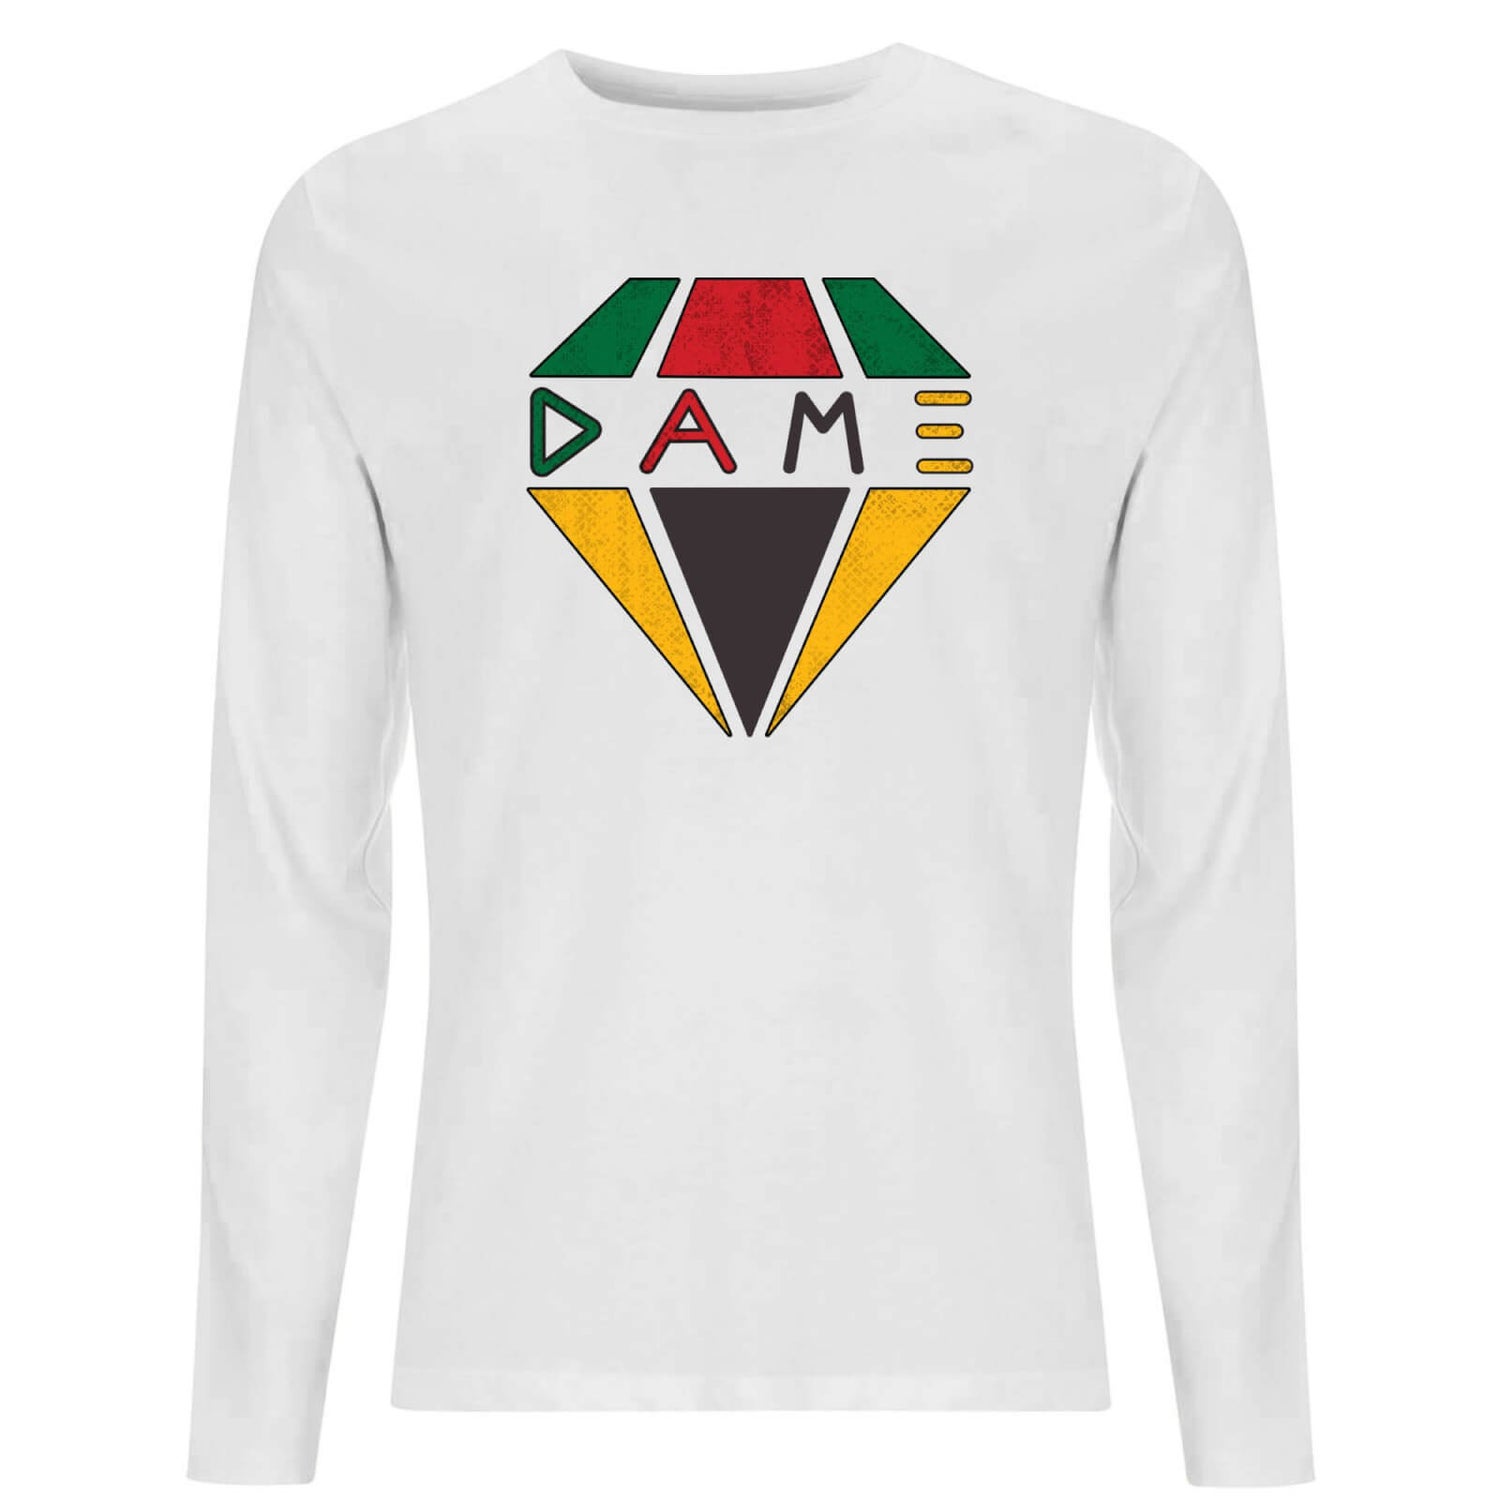 Creed DAME Diamond Logo Men's Long Sleeve T-Shirt - White